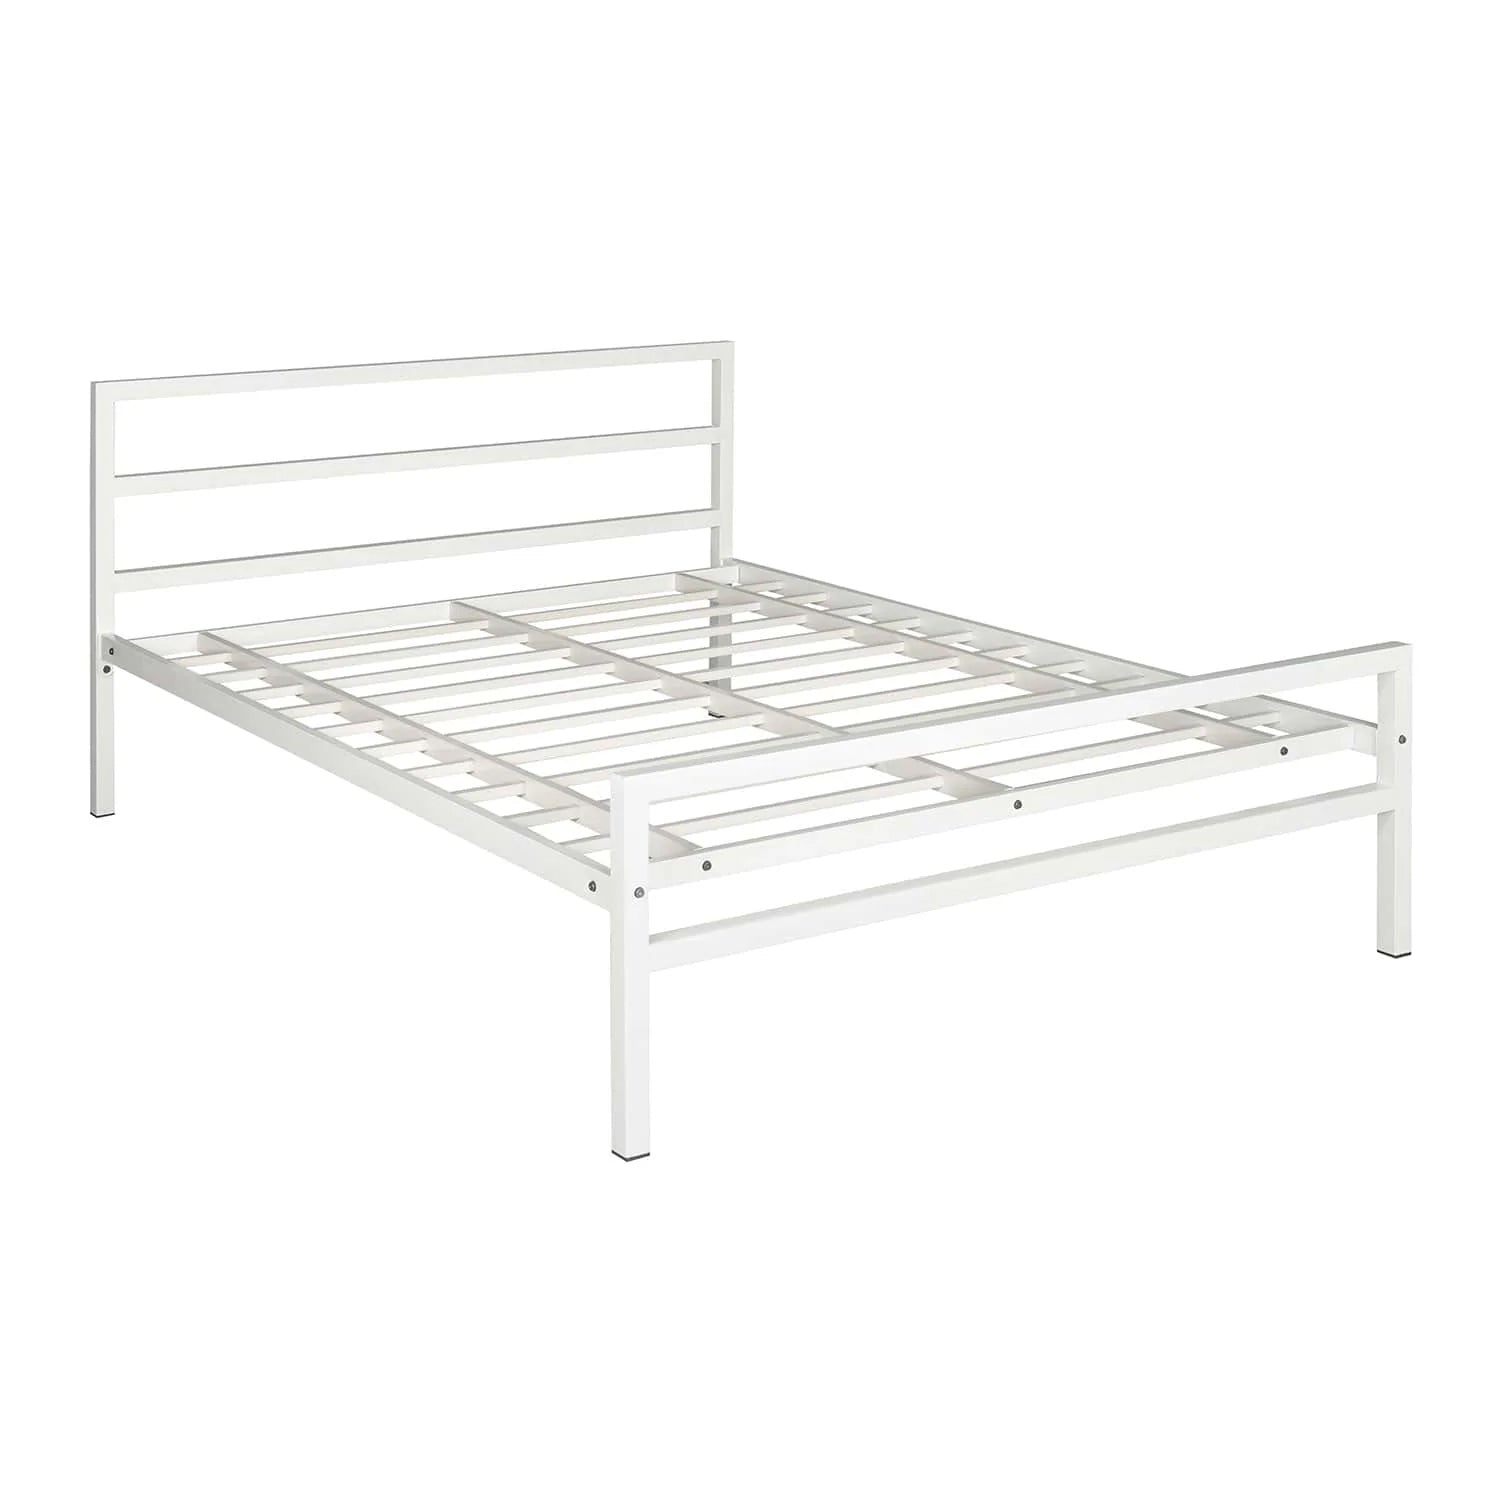 Striker Metal Bed White Plus Mattress Queen bed side view